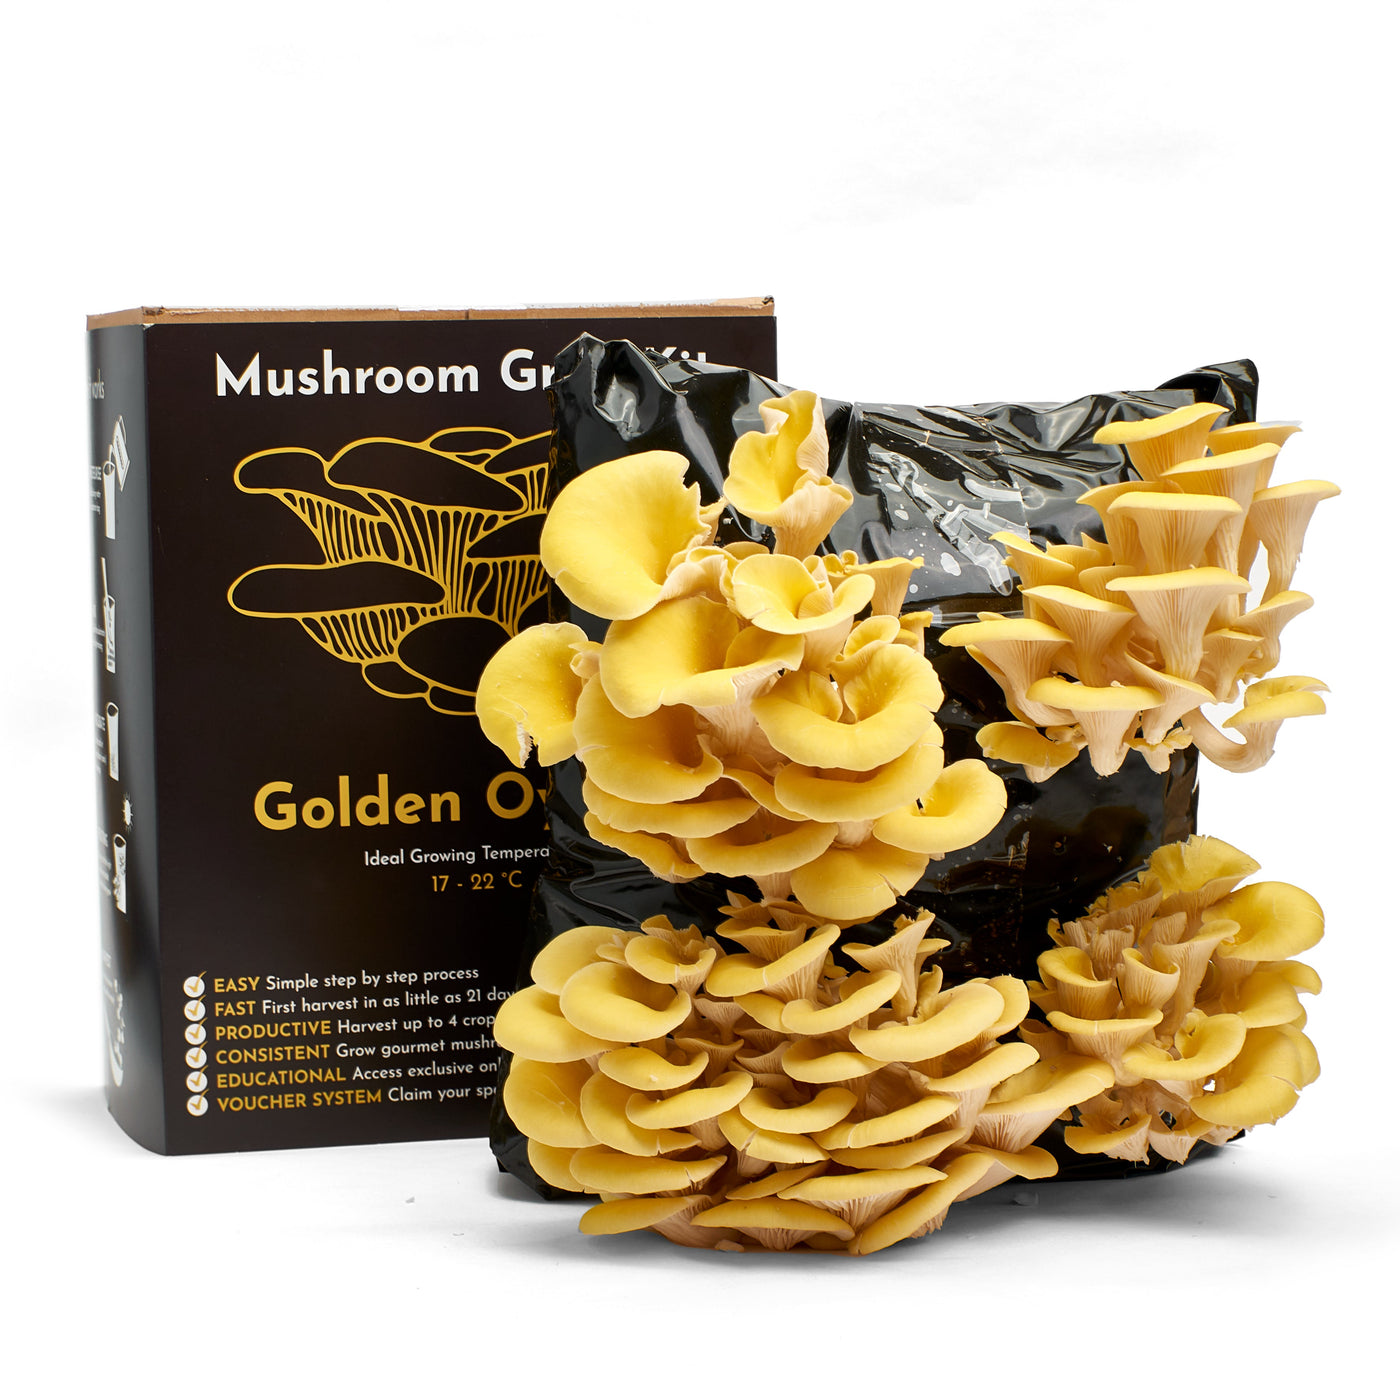 Yellow-Gold Oyster Mushroom Growing Kit – Gift Option